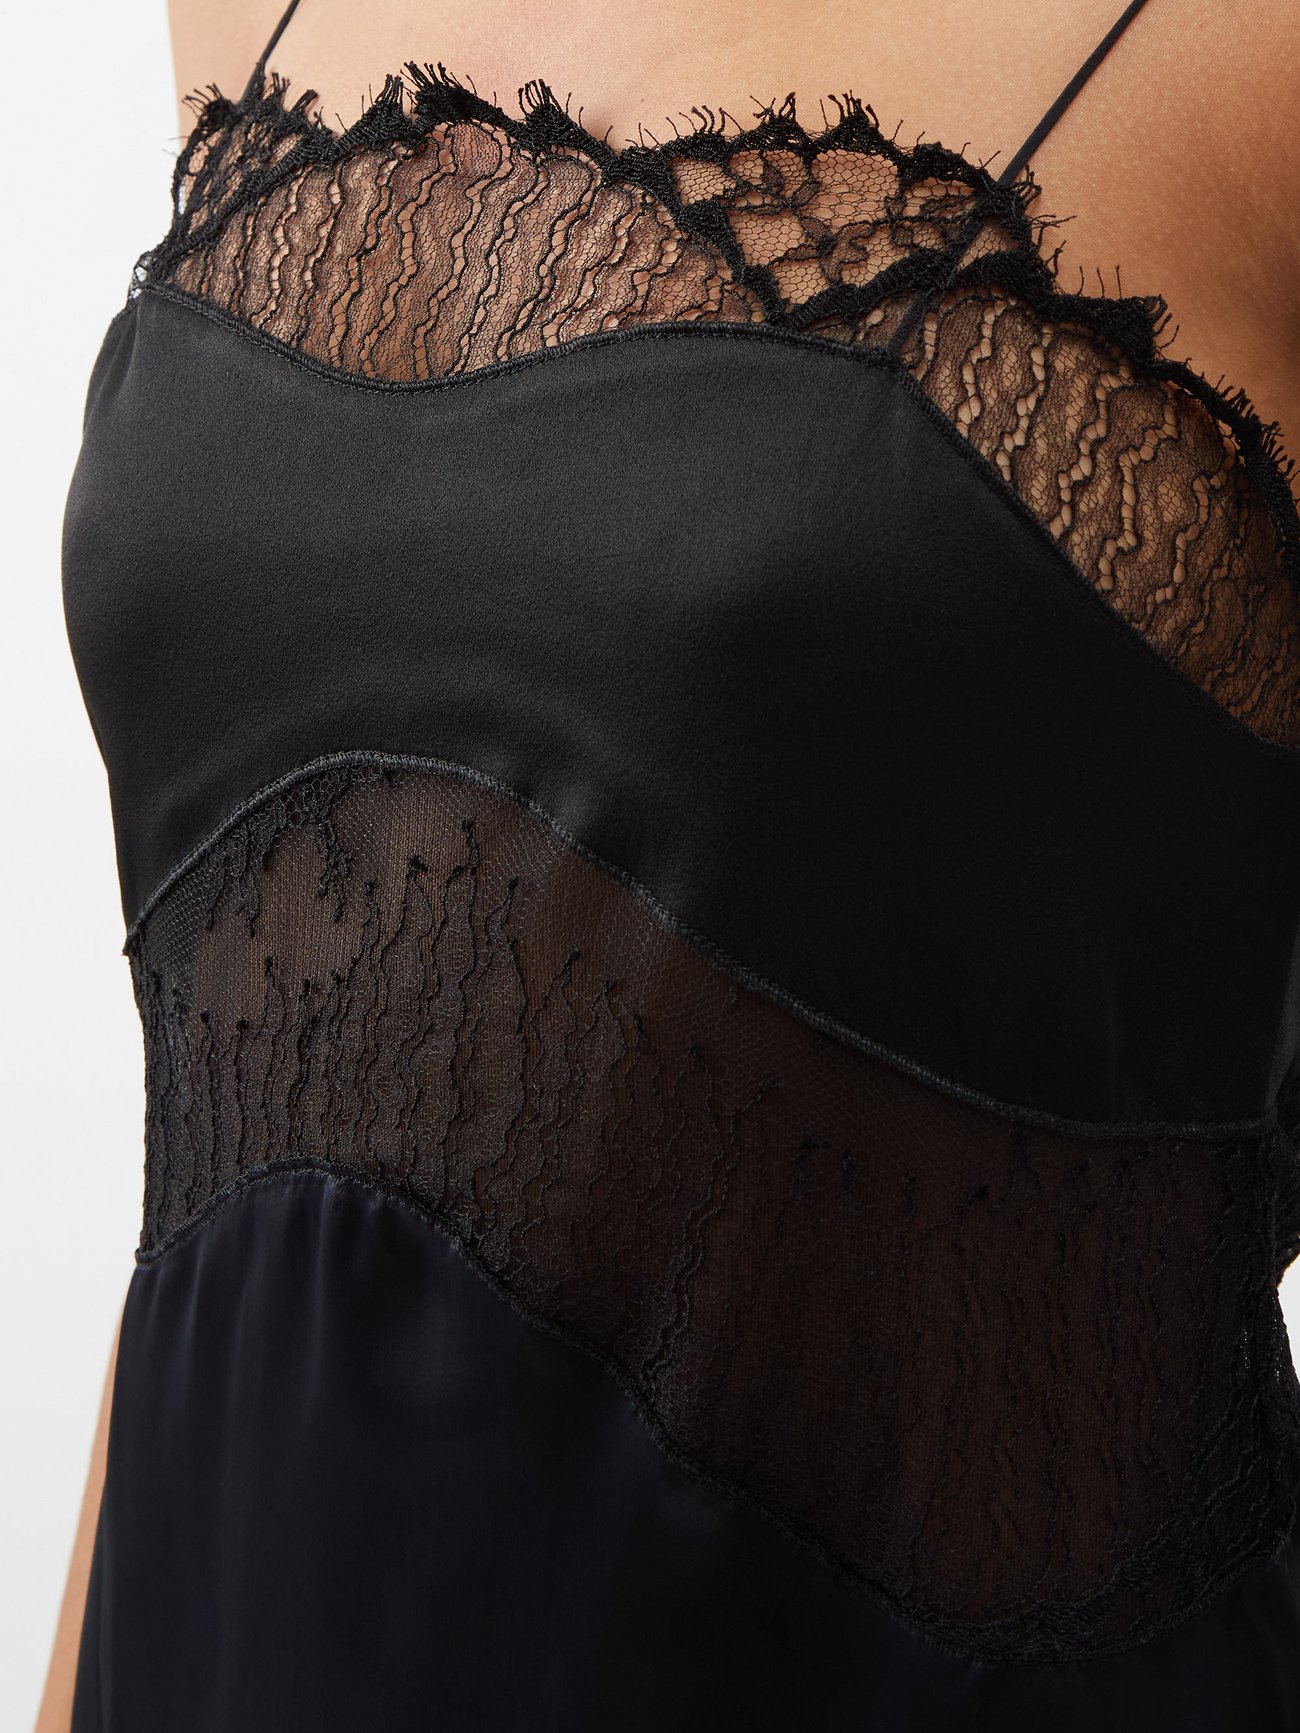 Black Lace-trim satin camisole dress, Victoria Beckham